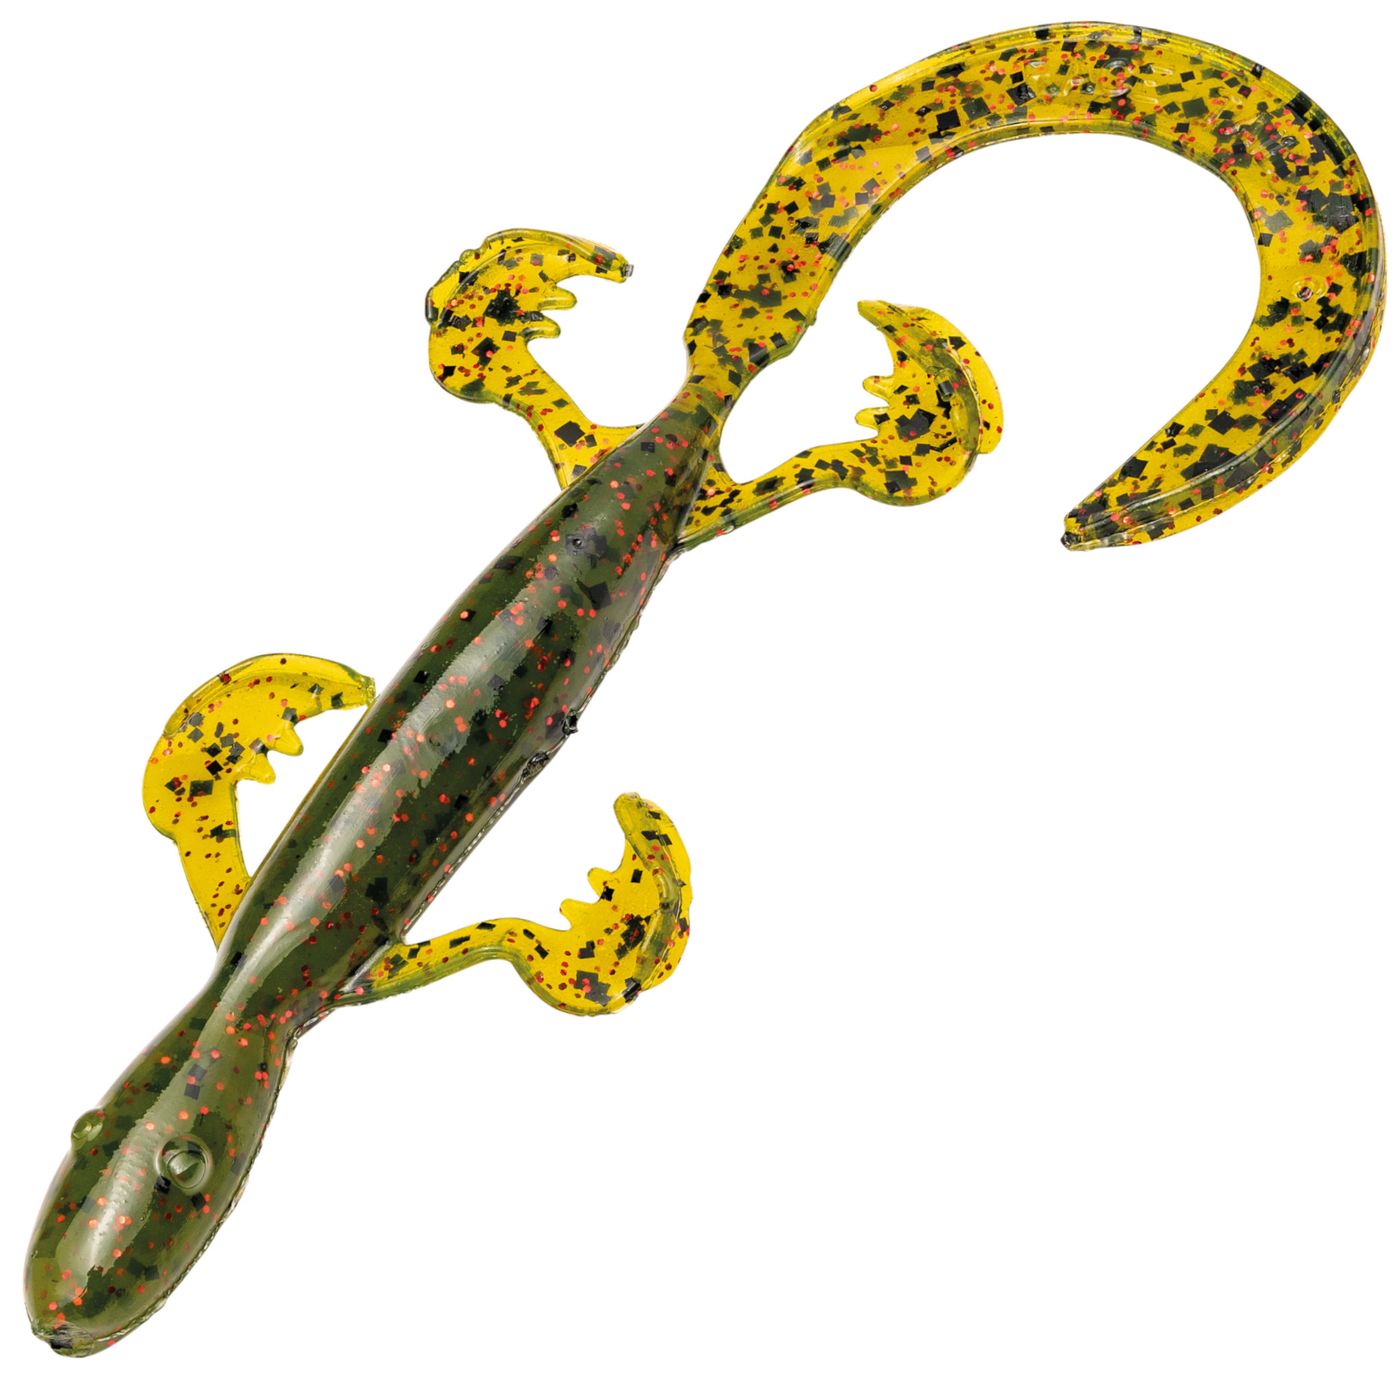 Strike King Rage Lizard 15cm - 7 Creature Baits